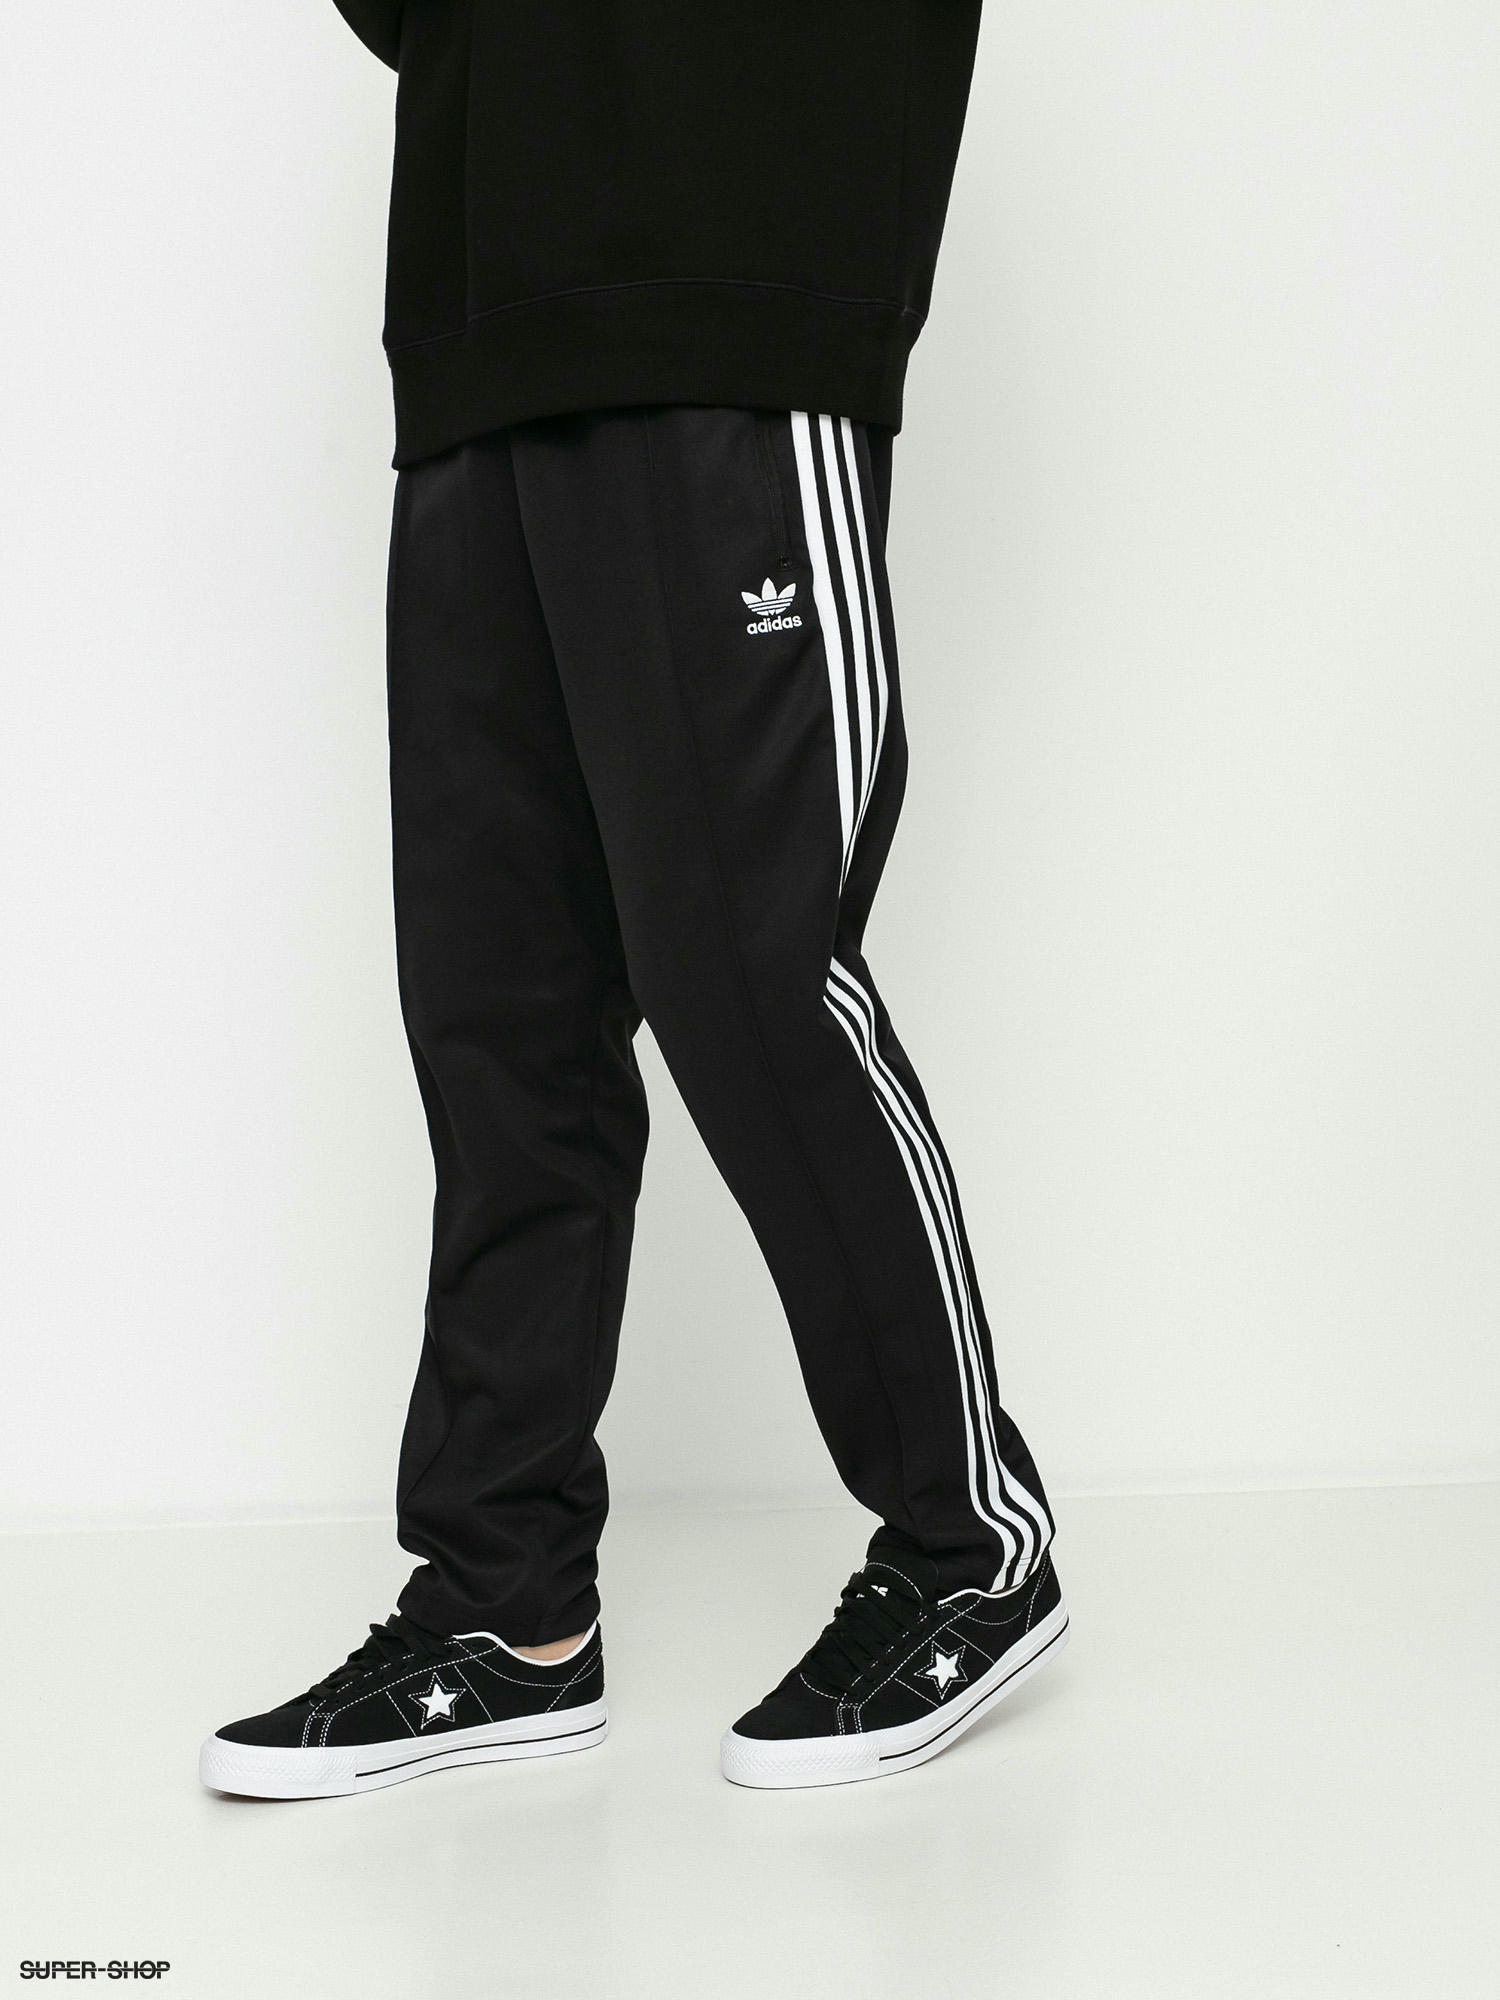 adidas Beckenbauer Track Pants - Black | Men's Lifestyle | adidas US